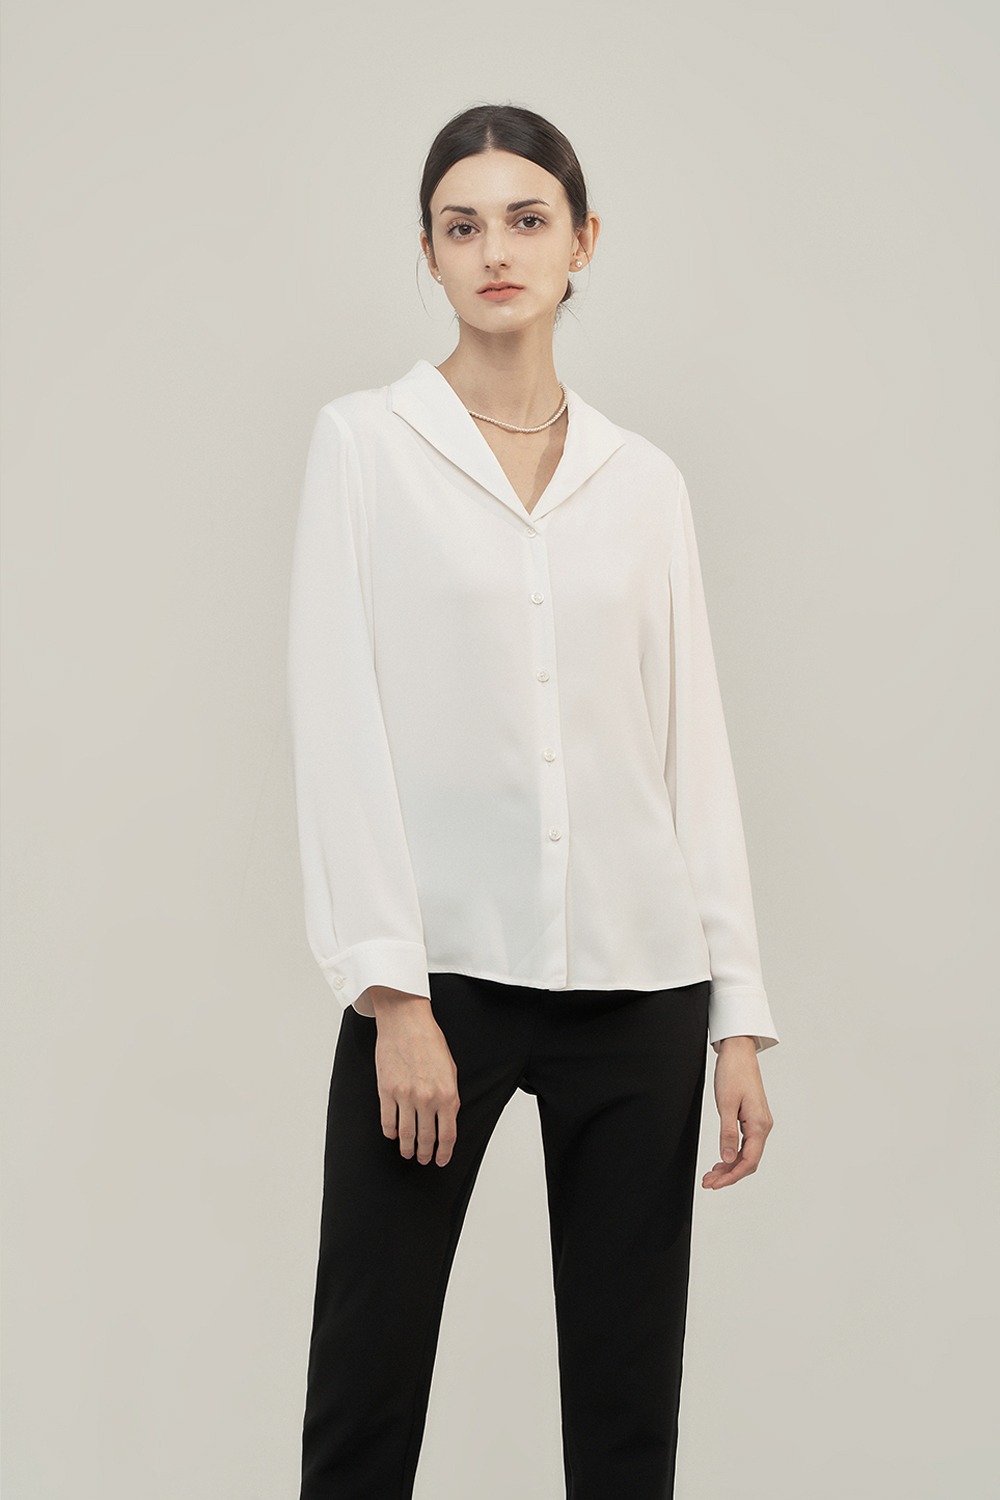 Open Collar White Shirt Blouse